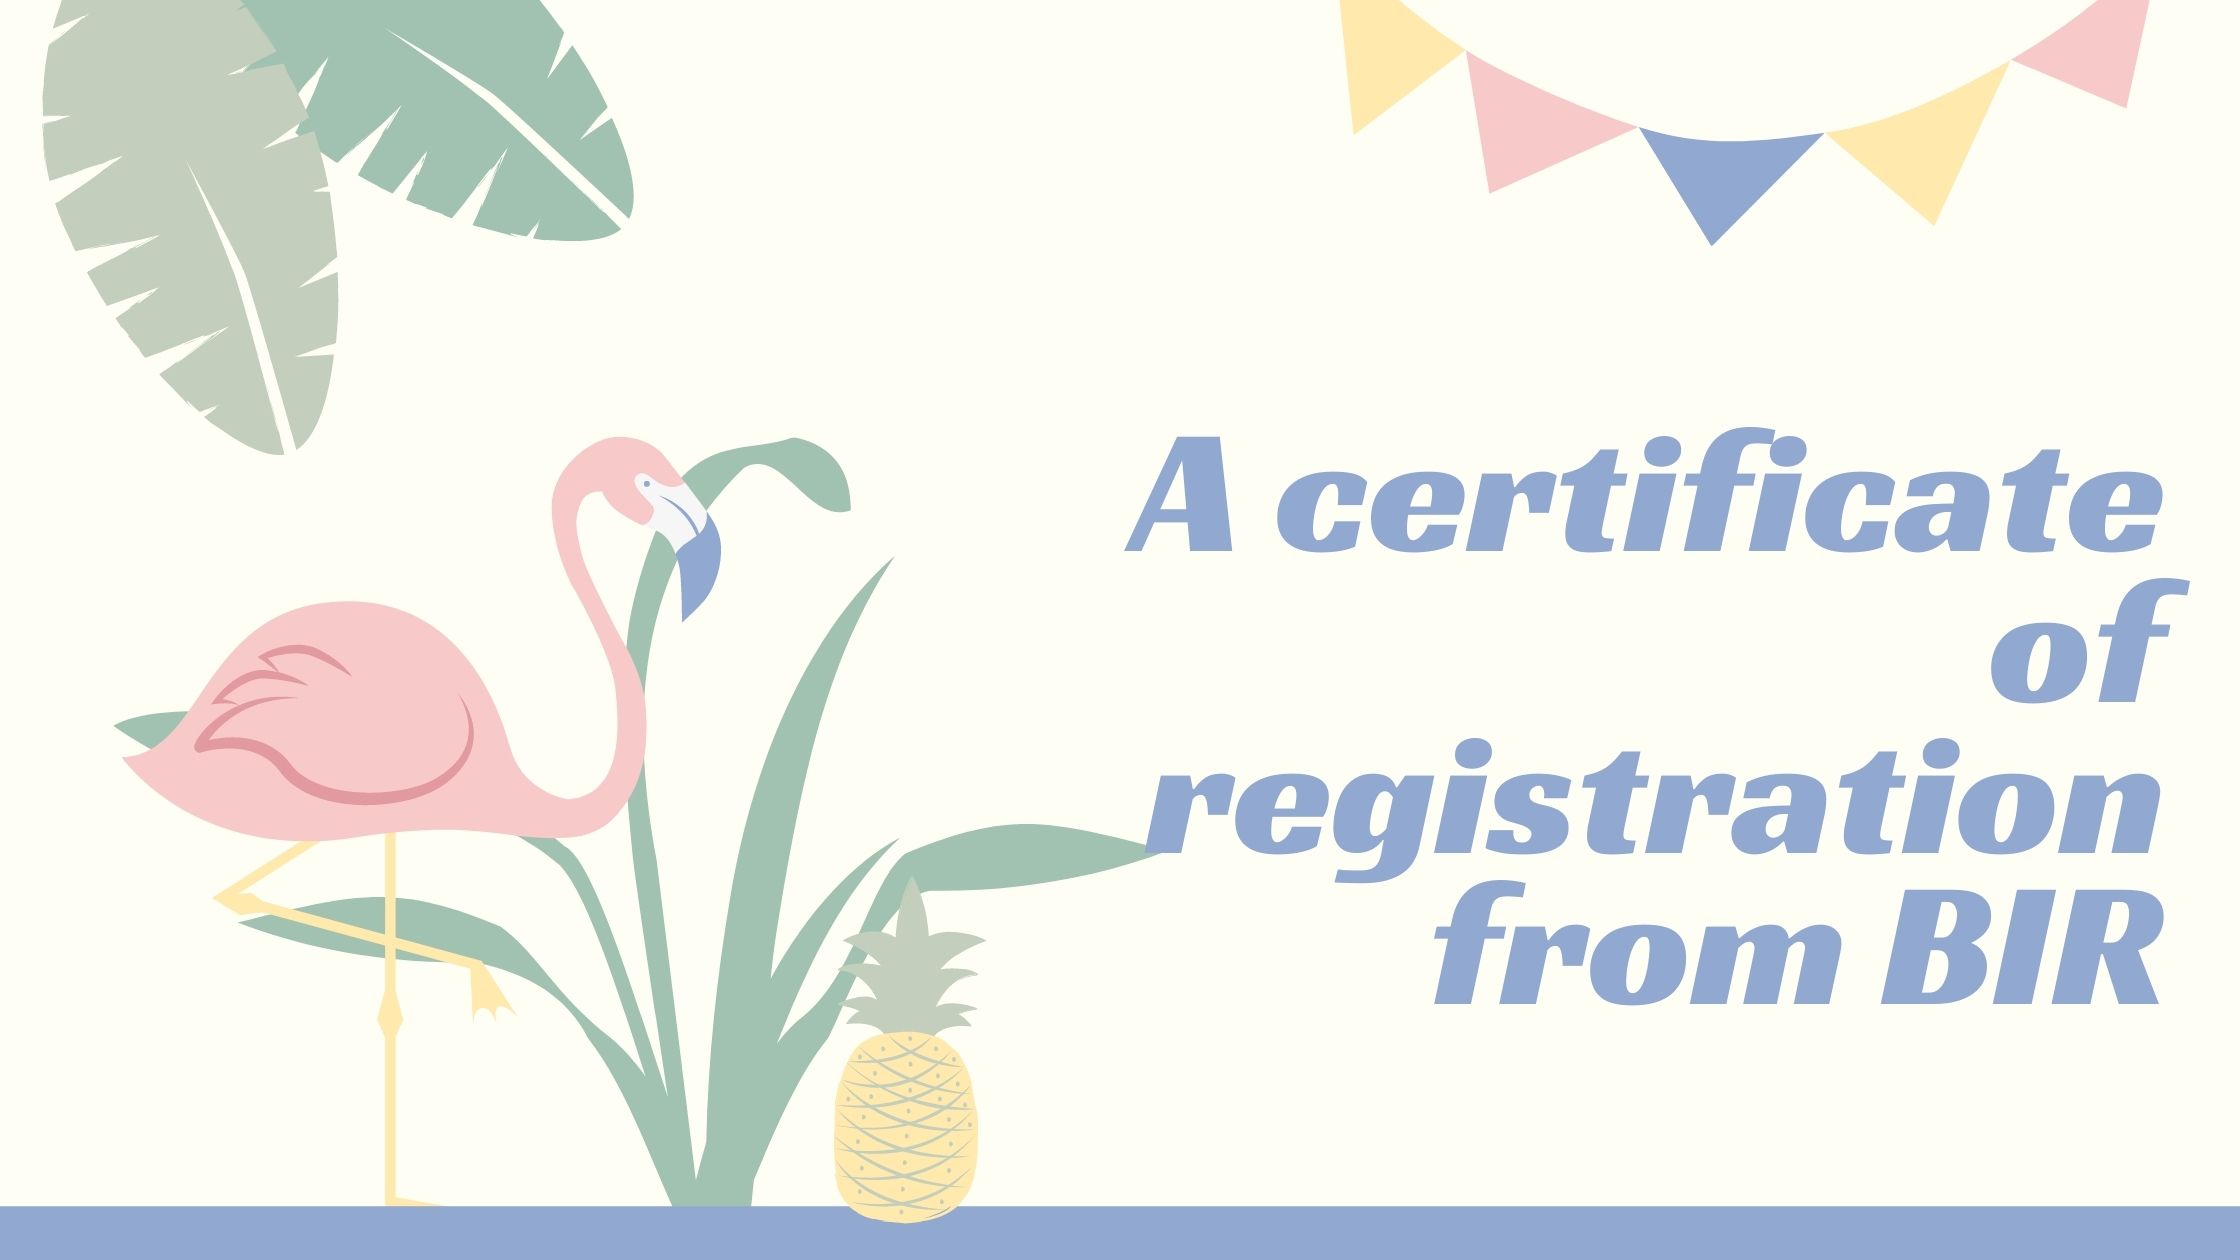 A certificate of registration from BIR